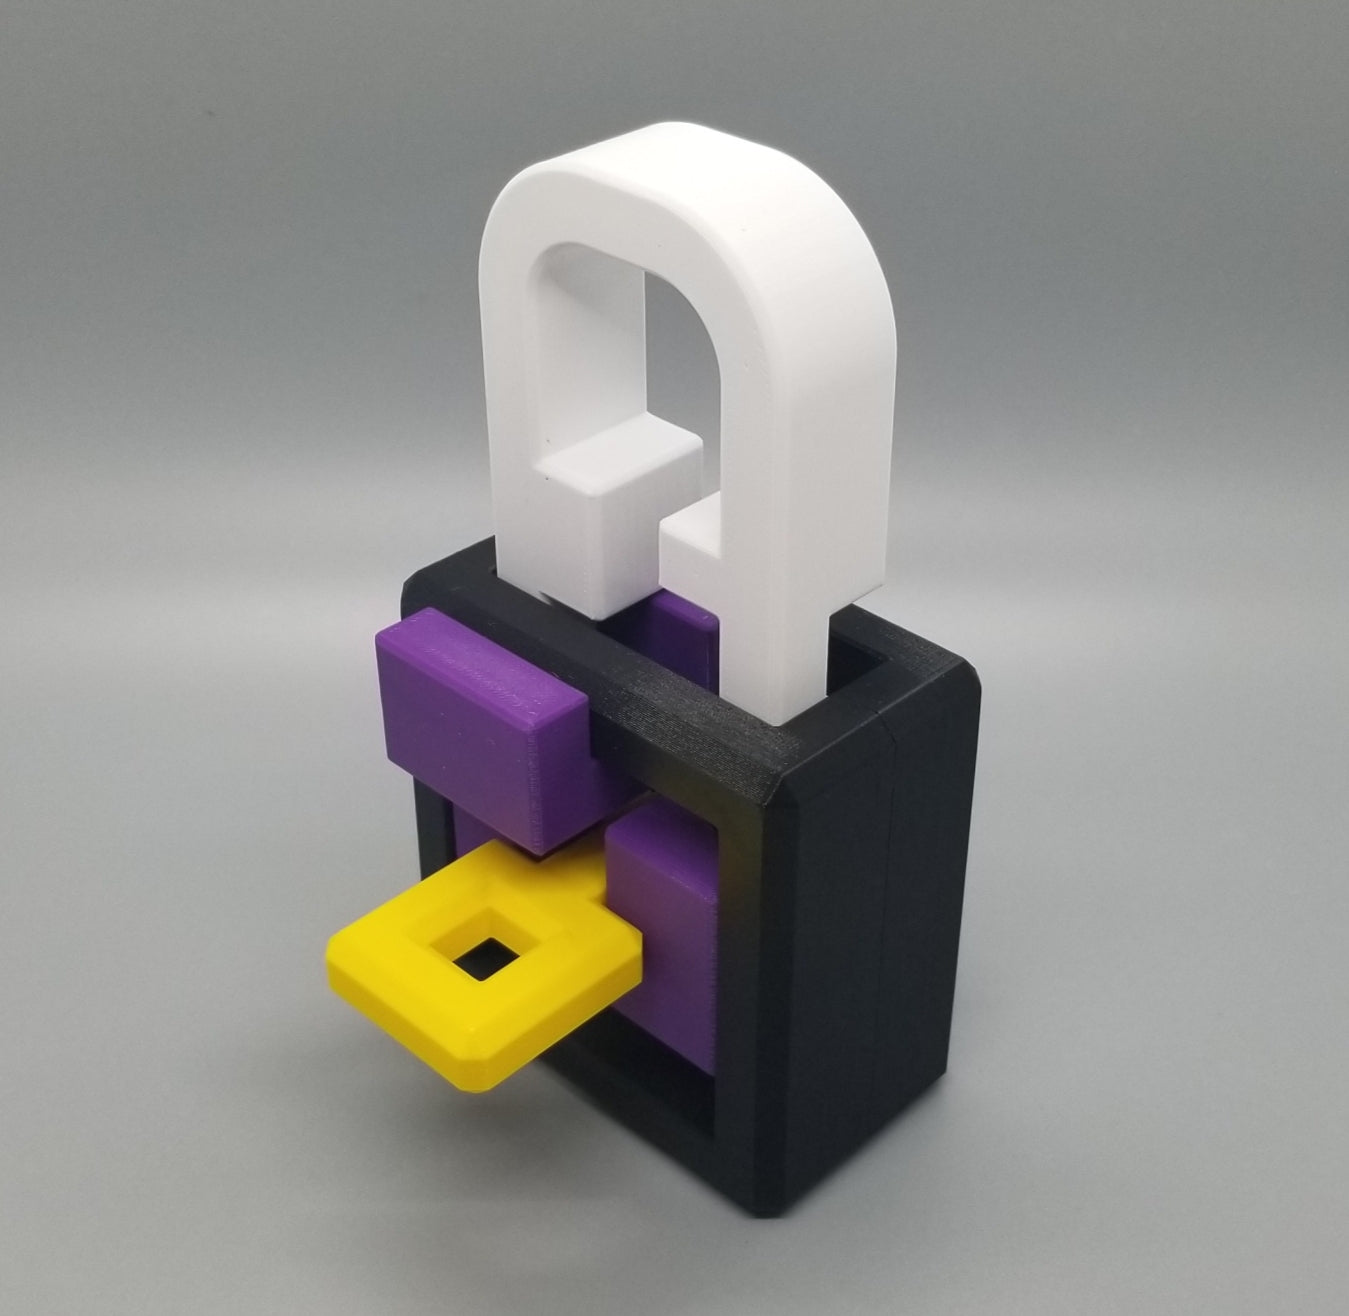 Burr Lock E - Designed by Chris Lohe